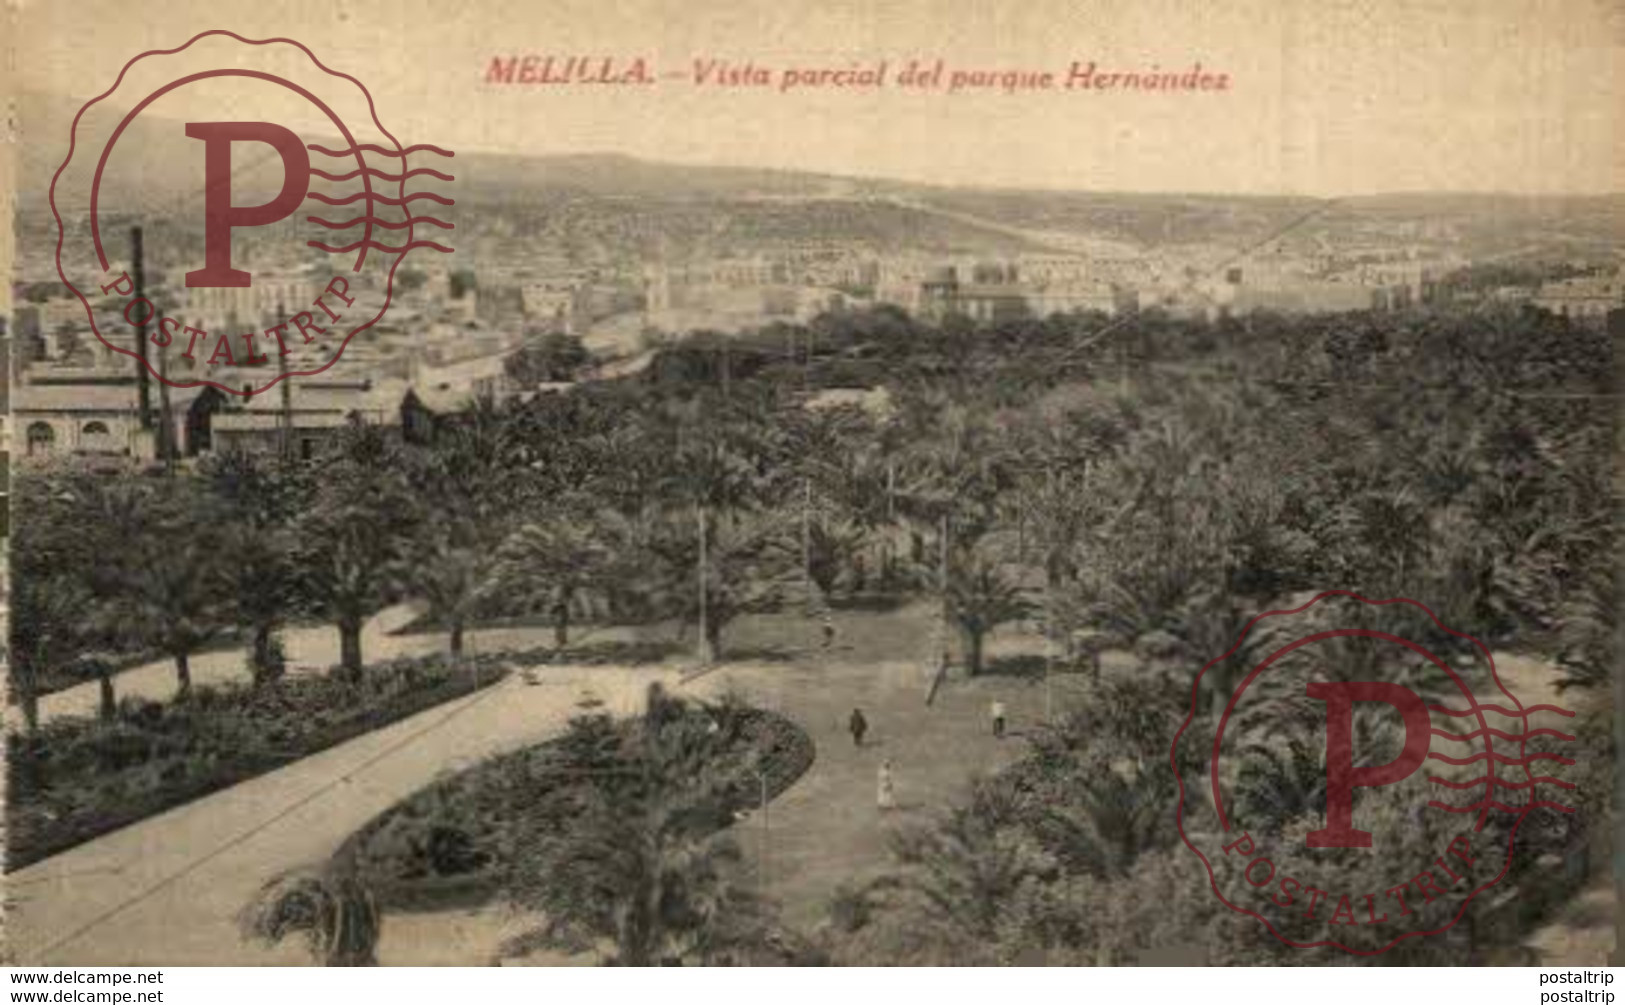 MELILLA. - VISTA PARCIAL DEL PARQUE HERNANDEZ - Melilla